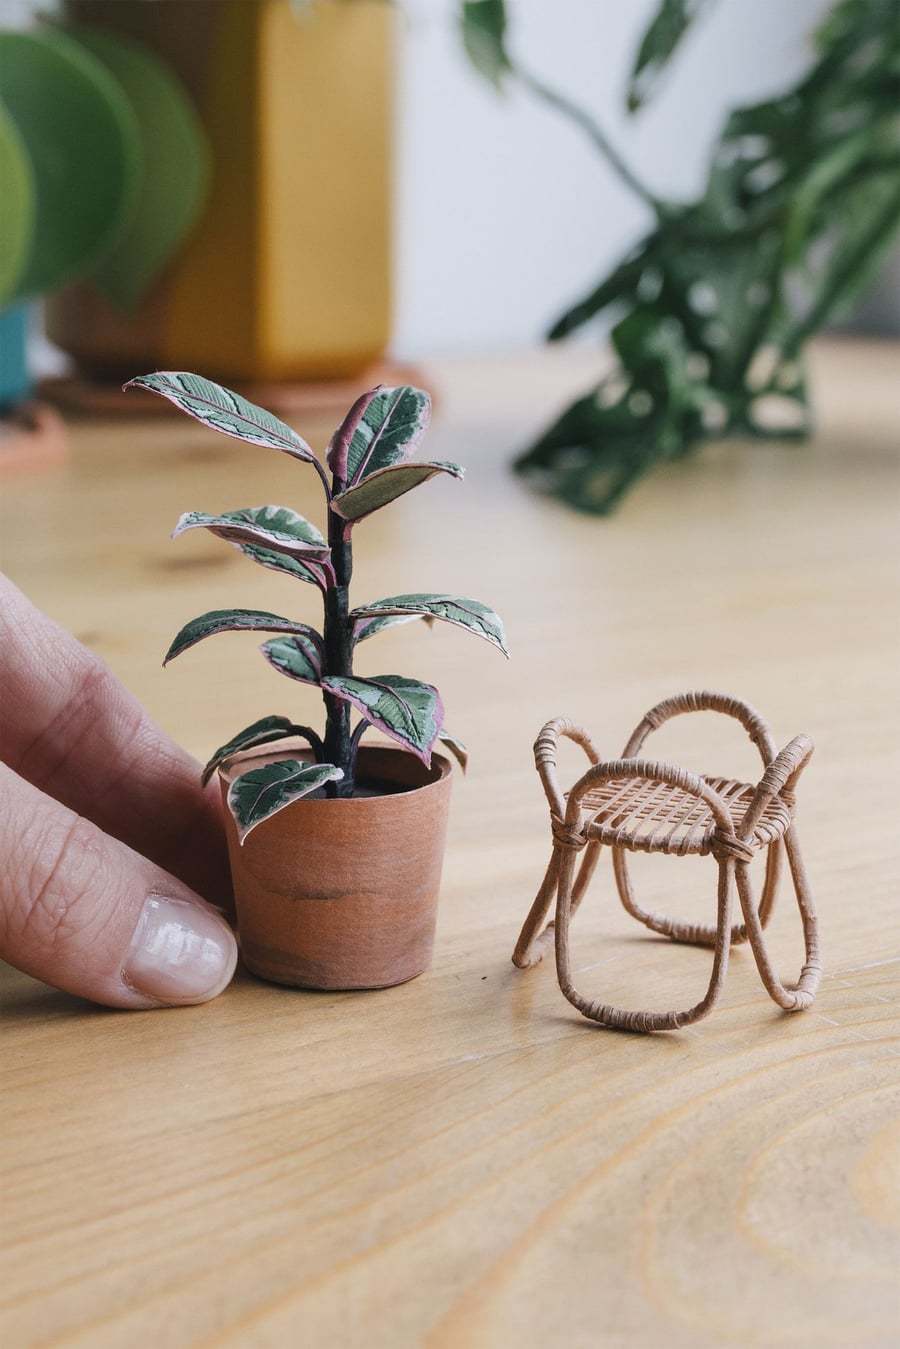 A miniature rubber plant replica by artist Raya Sader Bujana.